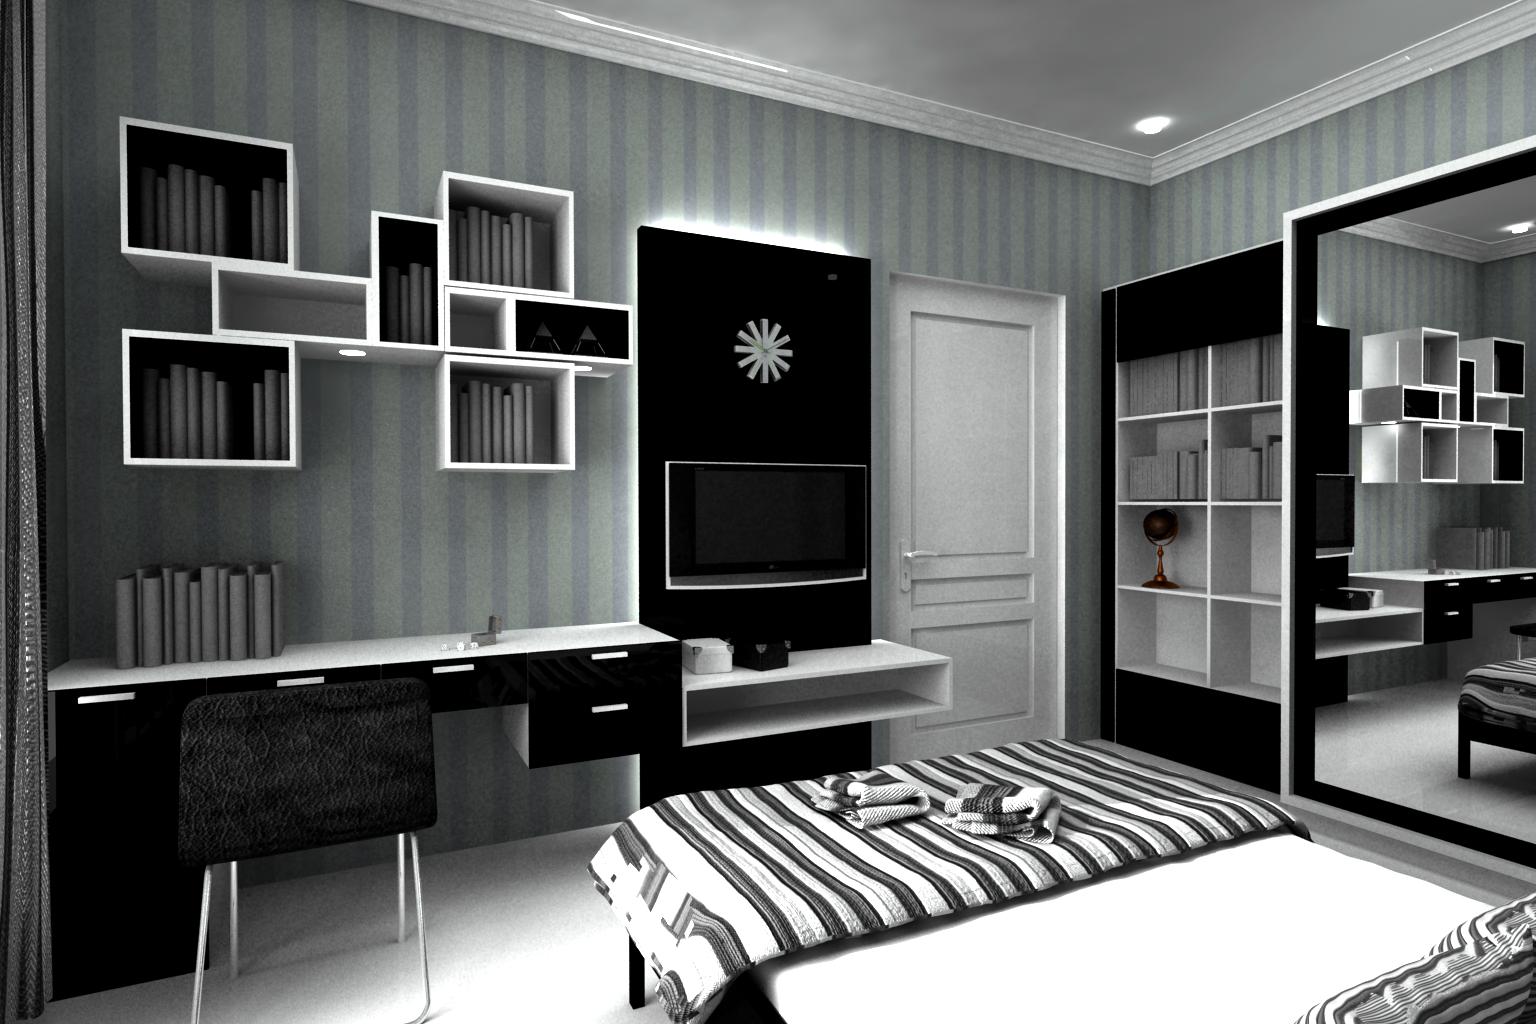 wallpaper dinding kamar hitam putih,furniture,room,black and white,black,bedroom